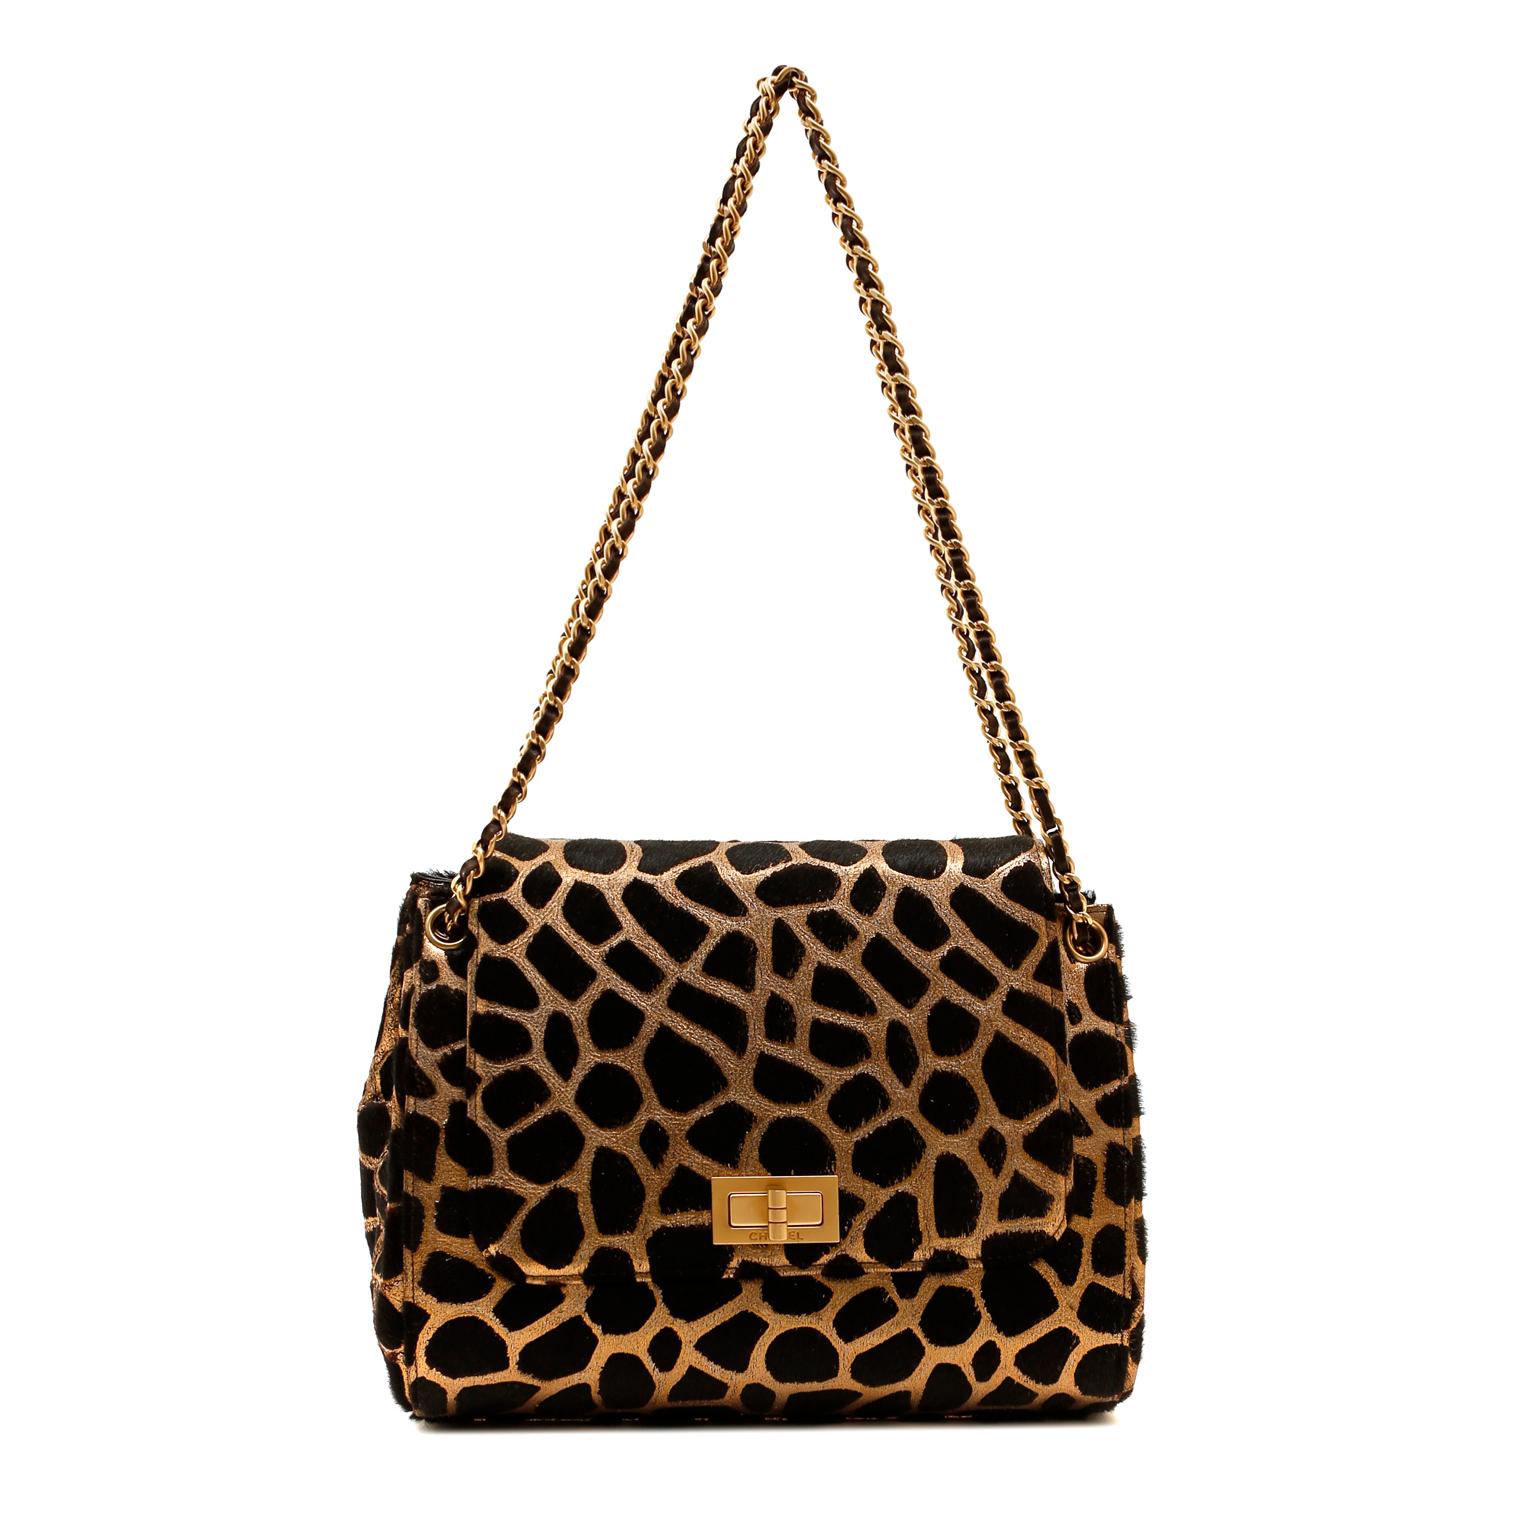 Chanel Giraffe Pattern Calf Hair Flap Bag Ltd. Ed. In Excellent Condition For Sale In Palm Beach, FL